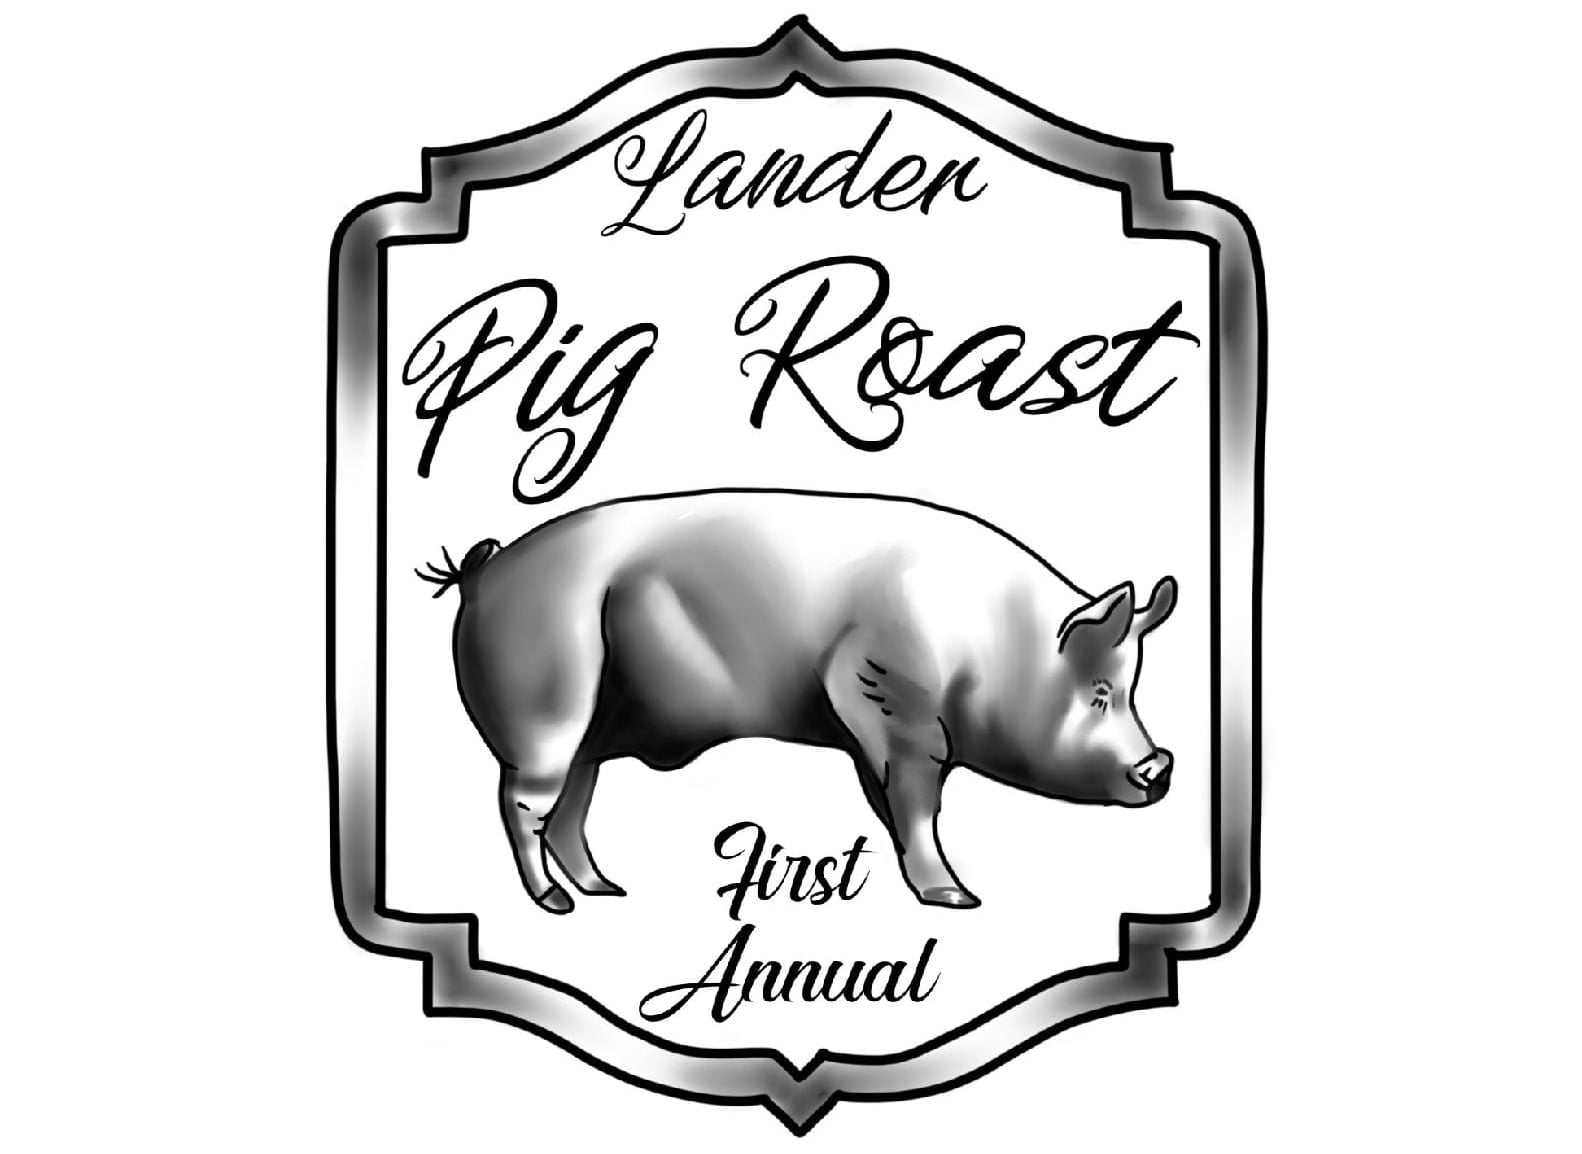 1st Annual Lander Community Pig Roast